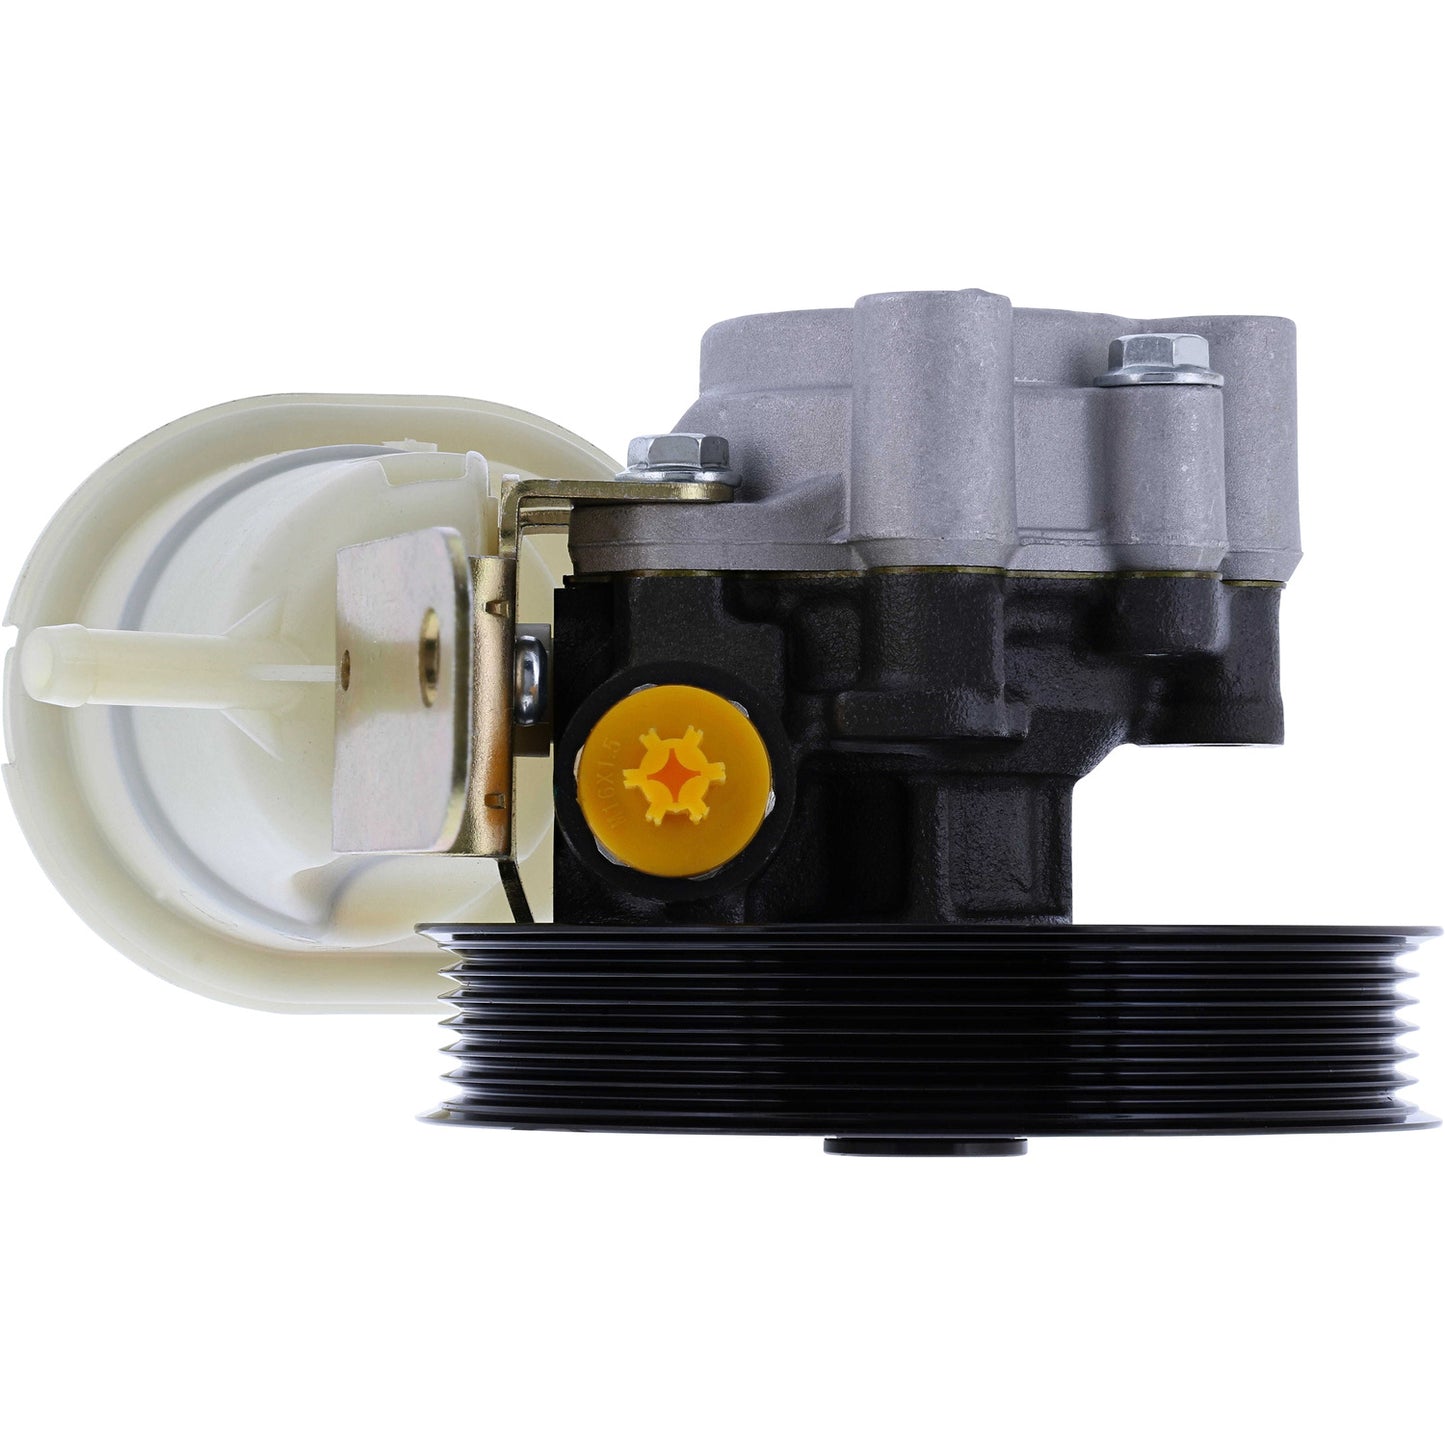 Power Steering Pump - Marathon HP - Hydraulic Power - New - 96943MN